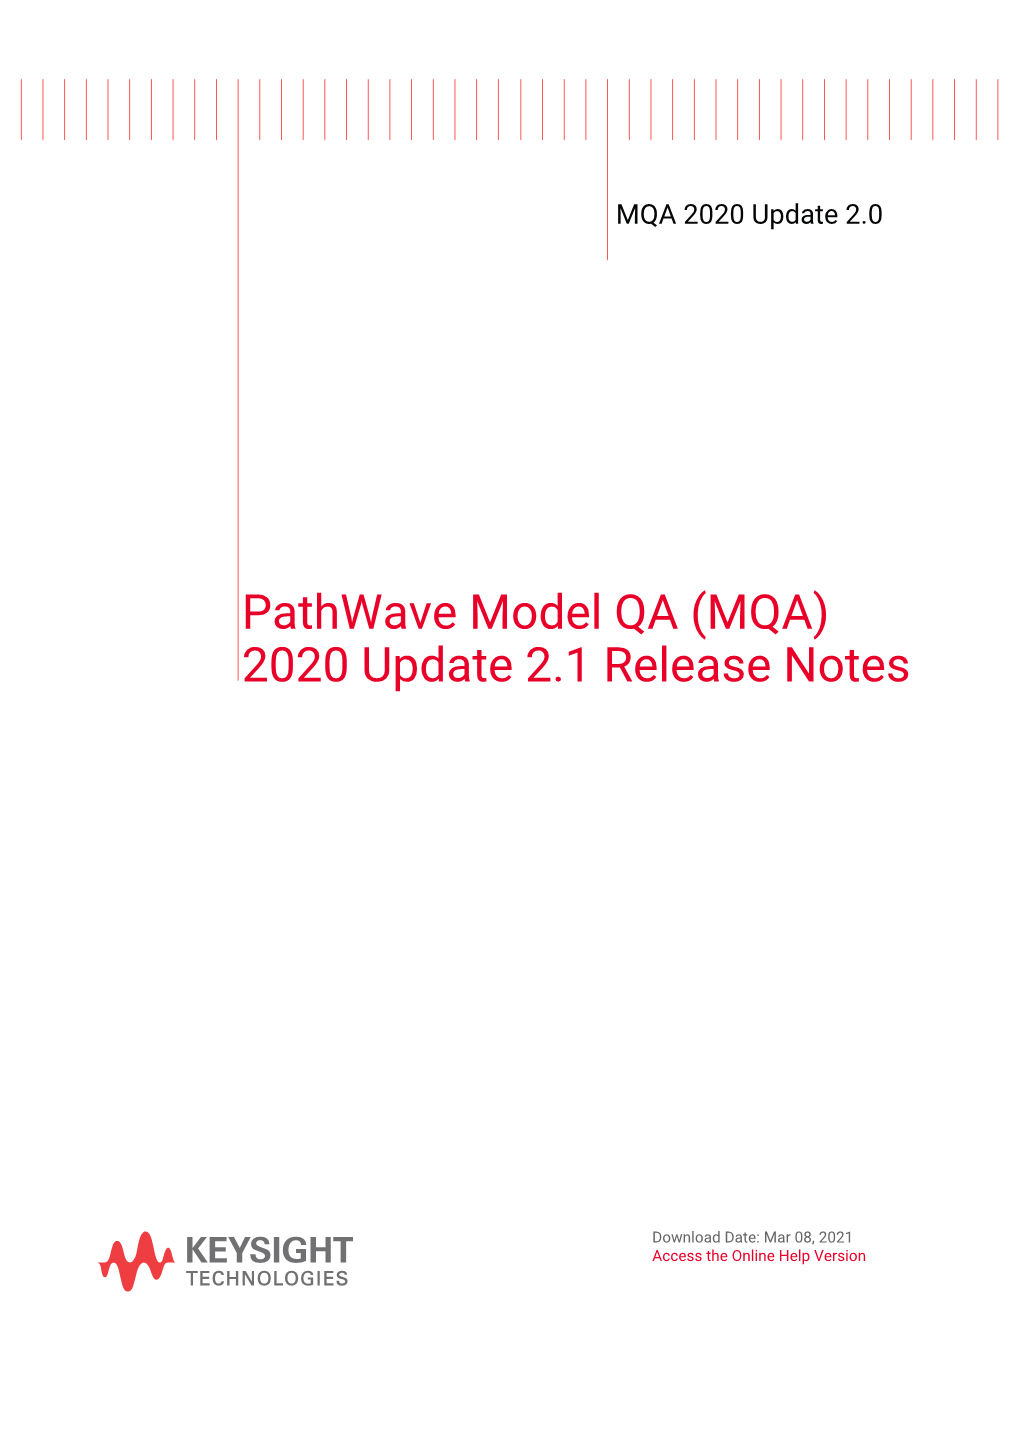 Pathwave Model QA (MQA) 2020 Update 2.1 Release Notes